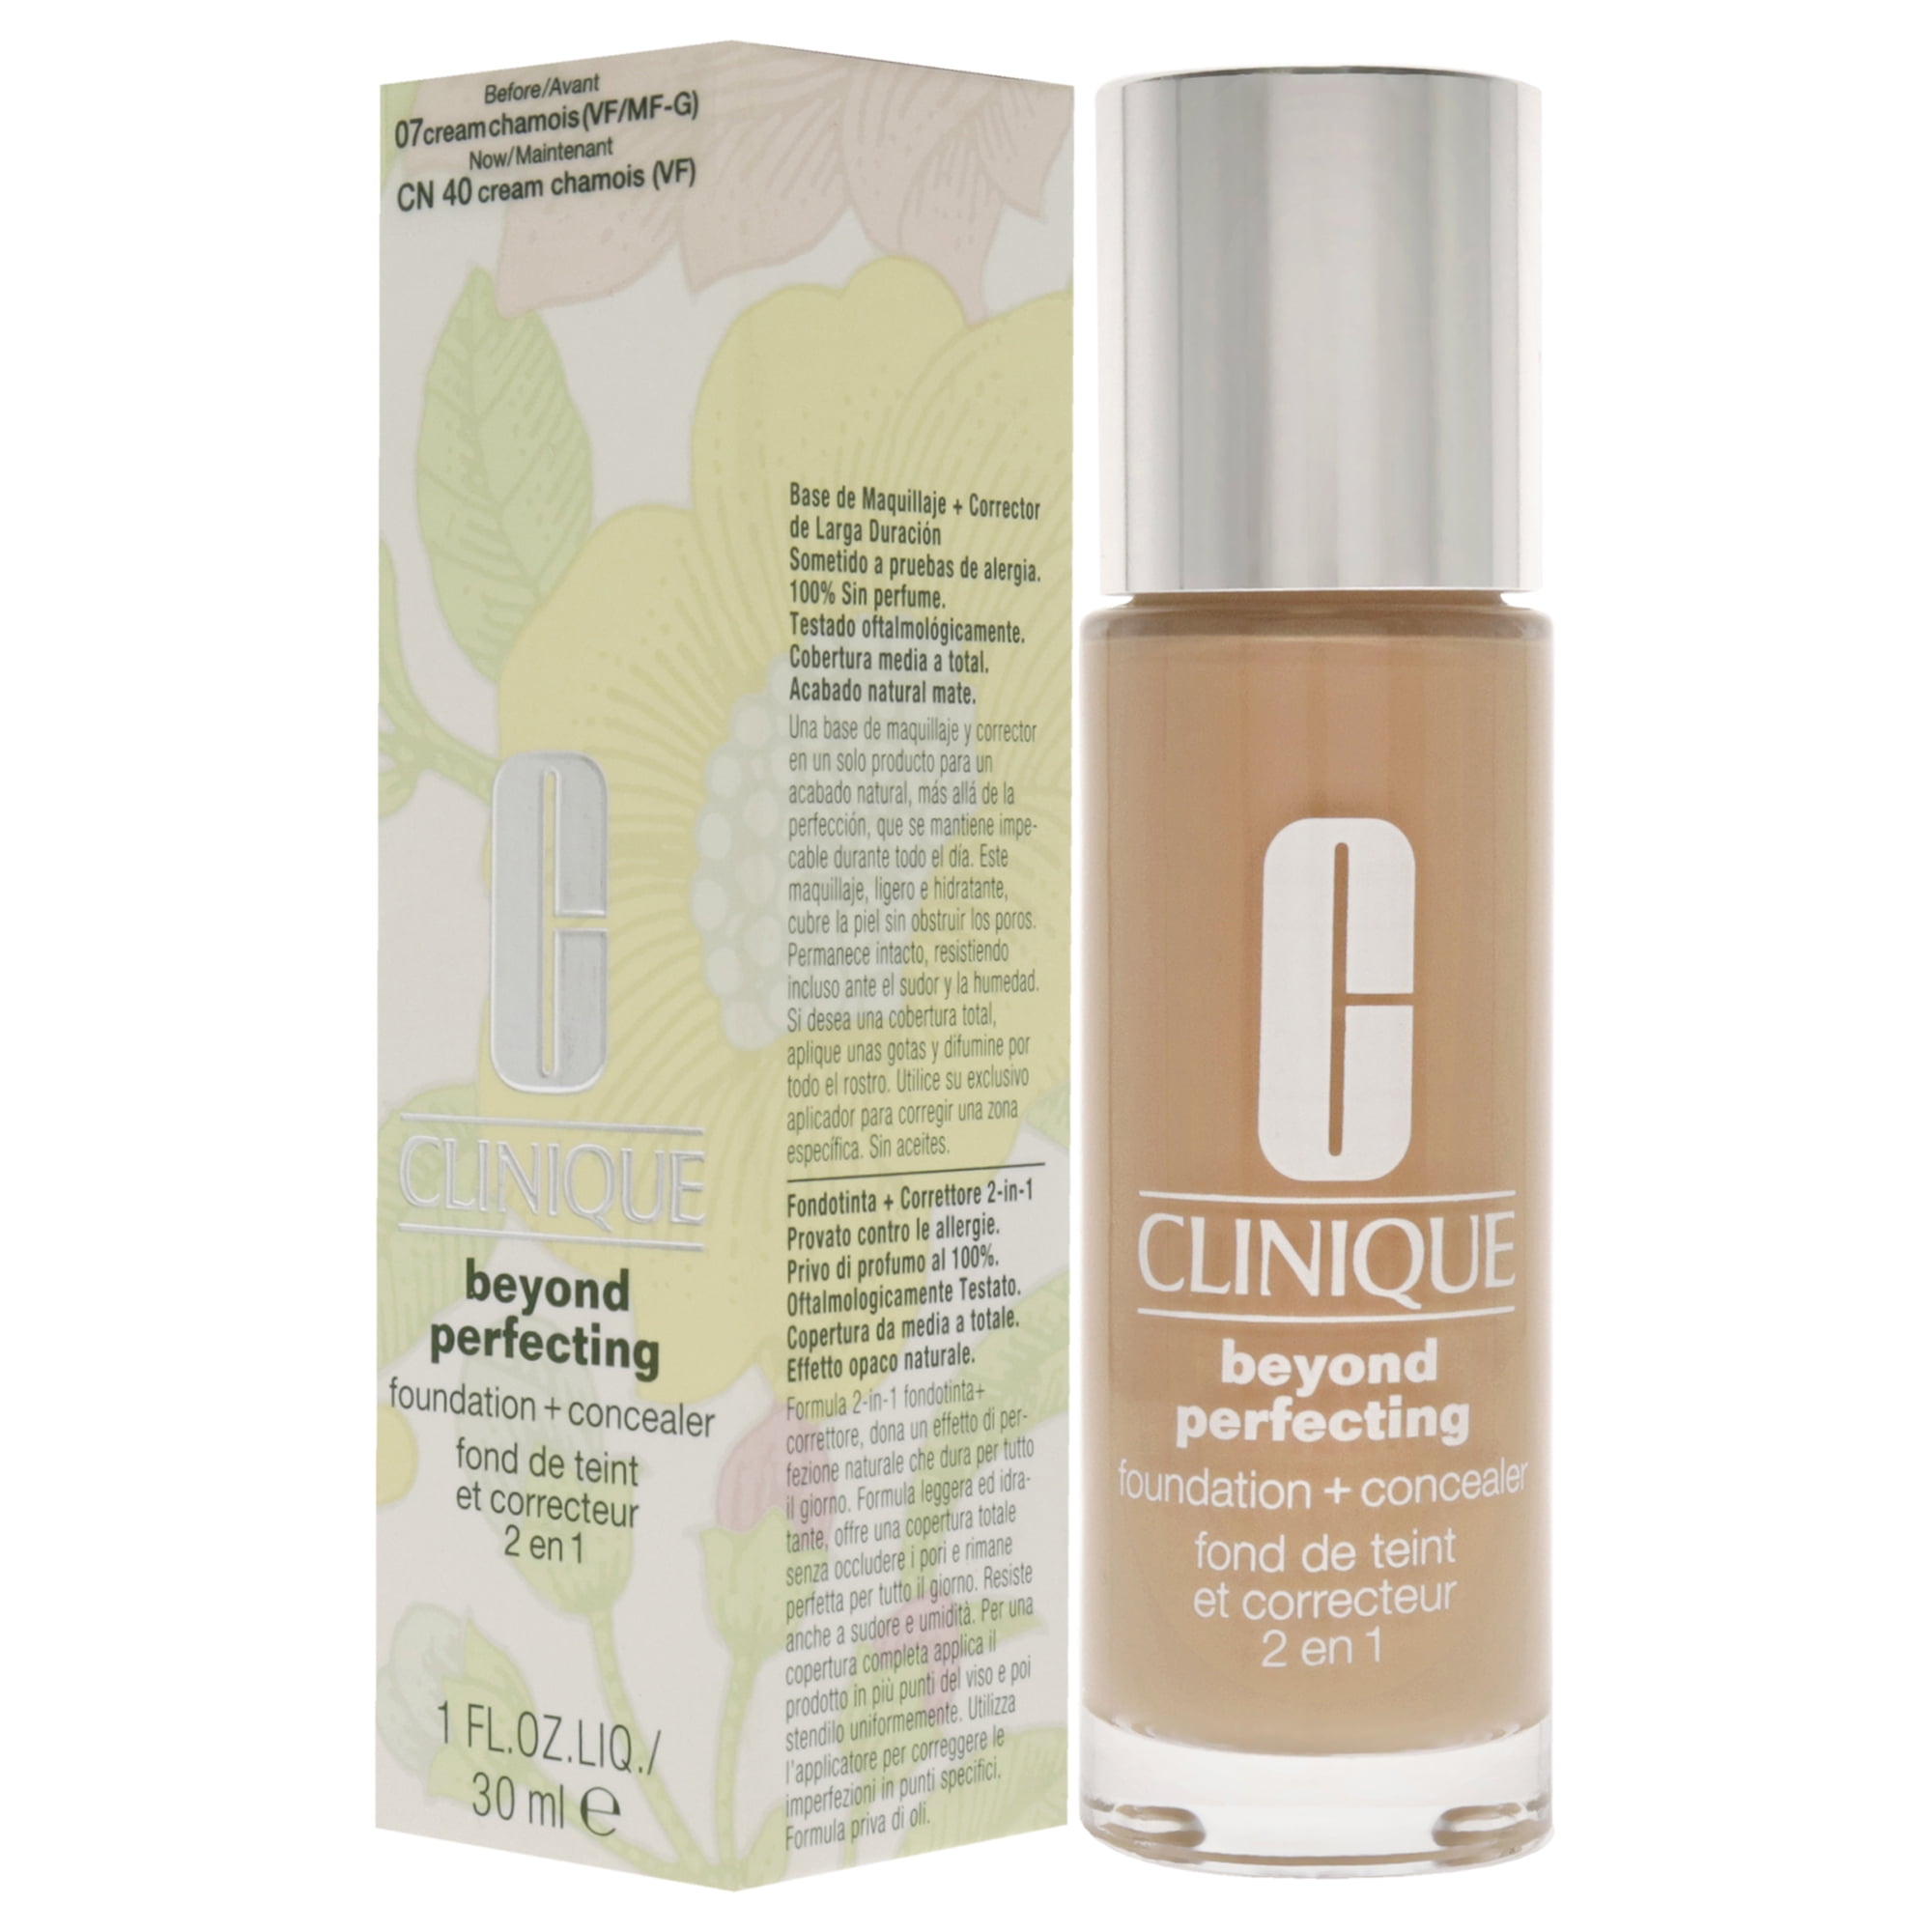 Clinique Beyond Perfecting Foundation Plus Concealer - 40 Cream Chamois oz Makeup -